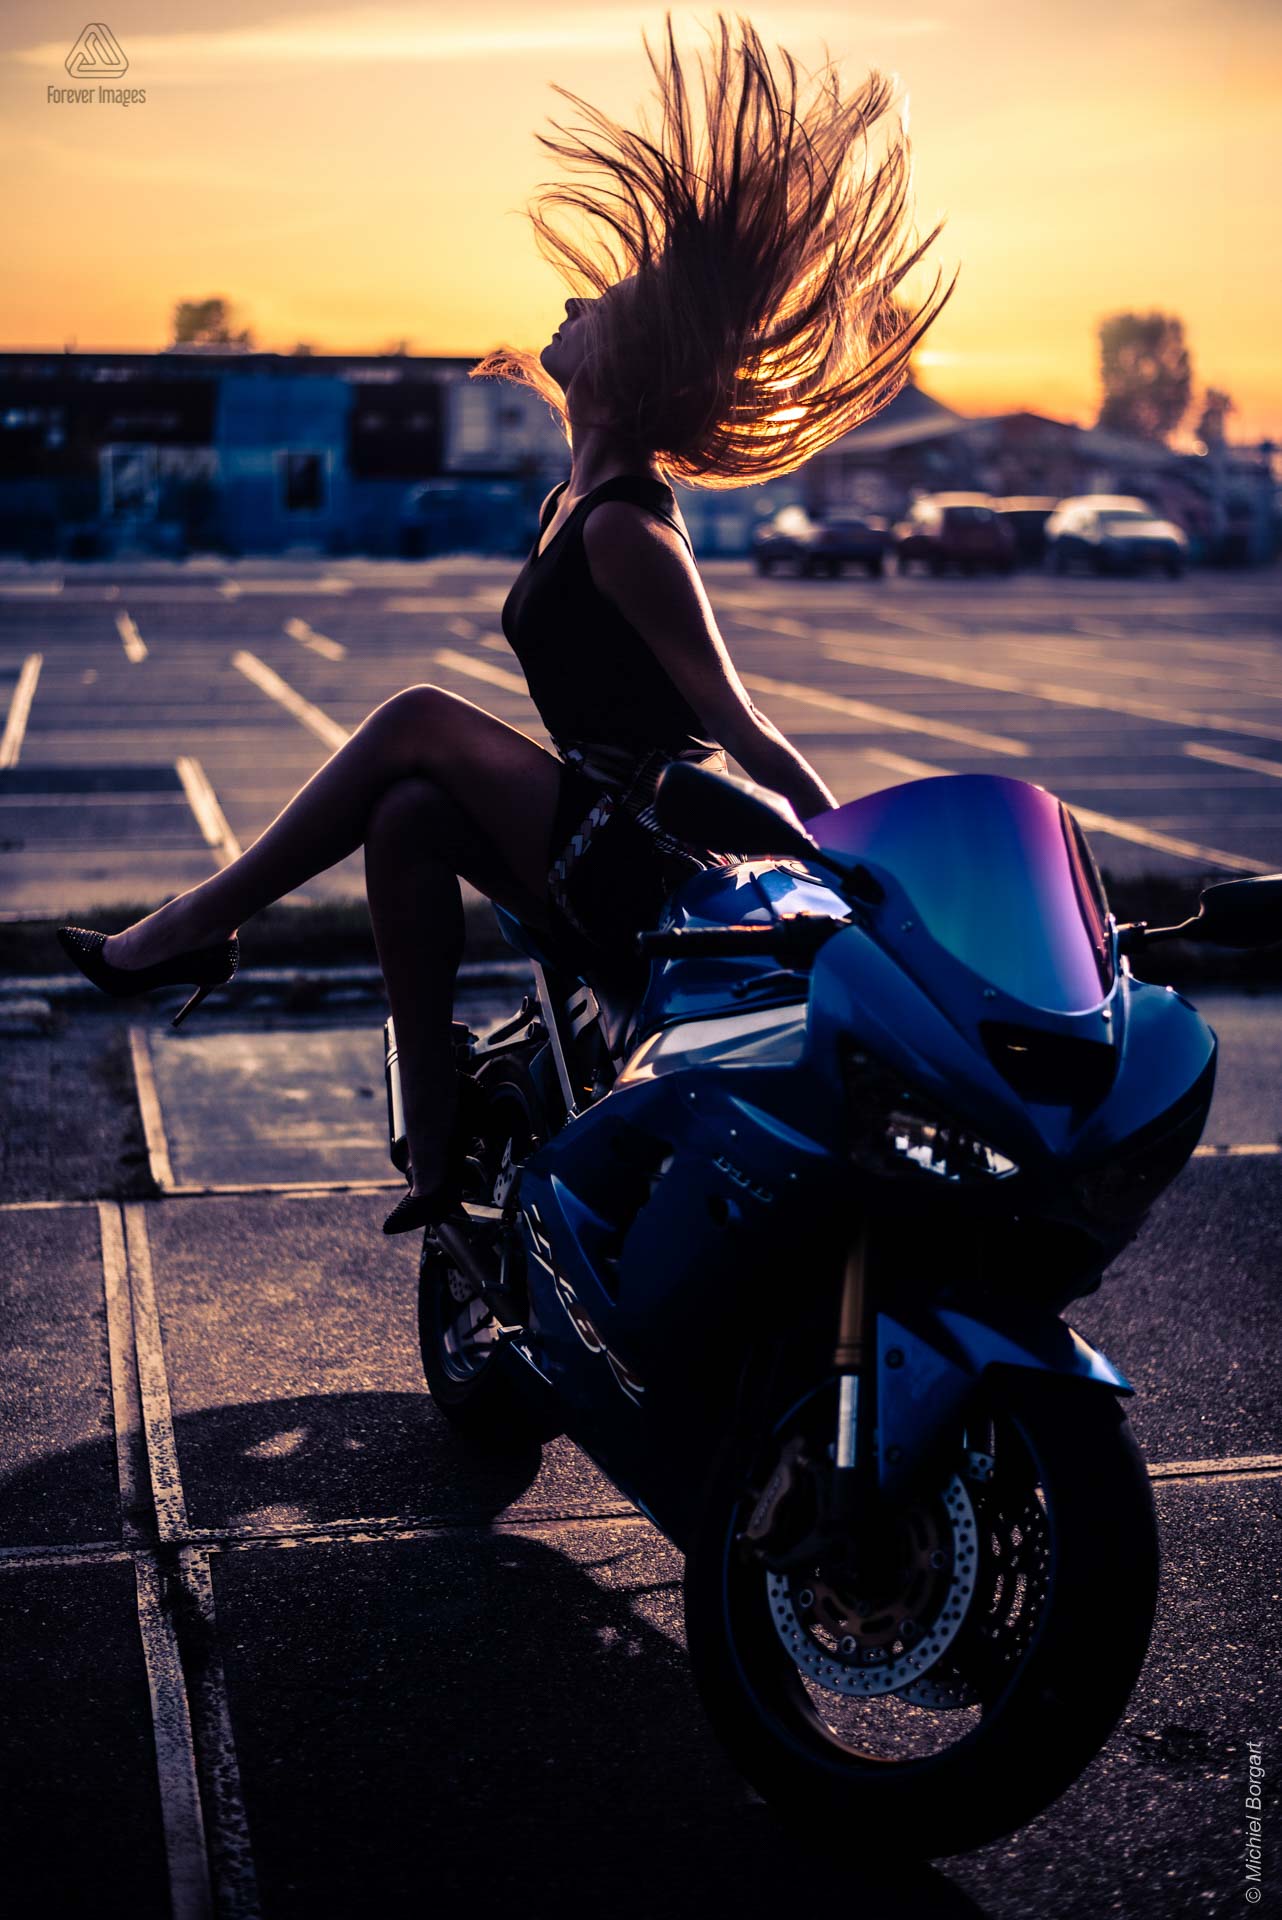 Portretfoto dame hairflip op Kawasaki Ninja ZX-6R 636 zonsondergang | Heleen Muchachabiker NDSM Werf | Portretfotograaf Michiel Borgart - Forever Images.